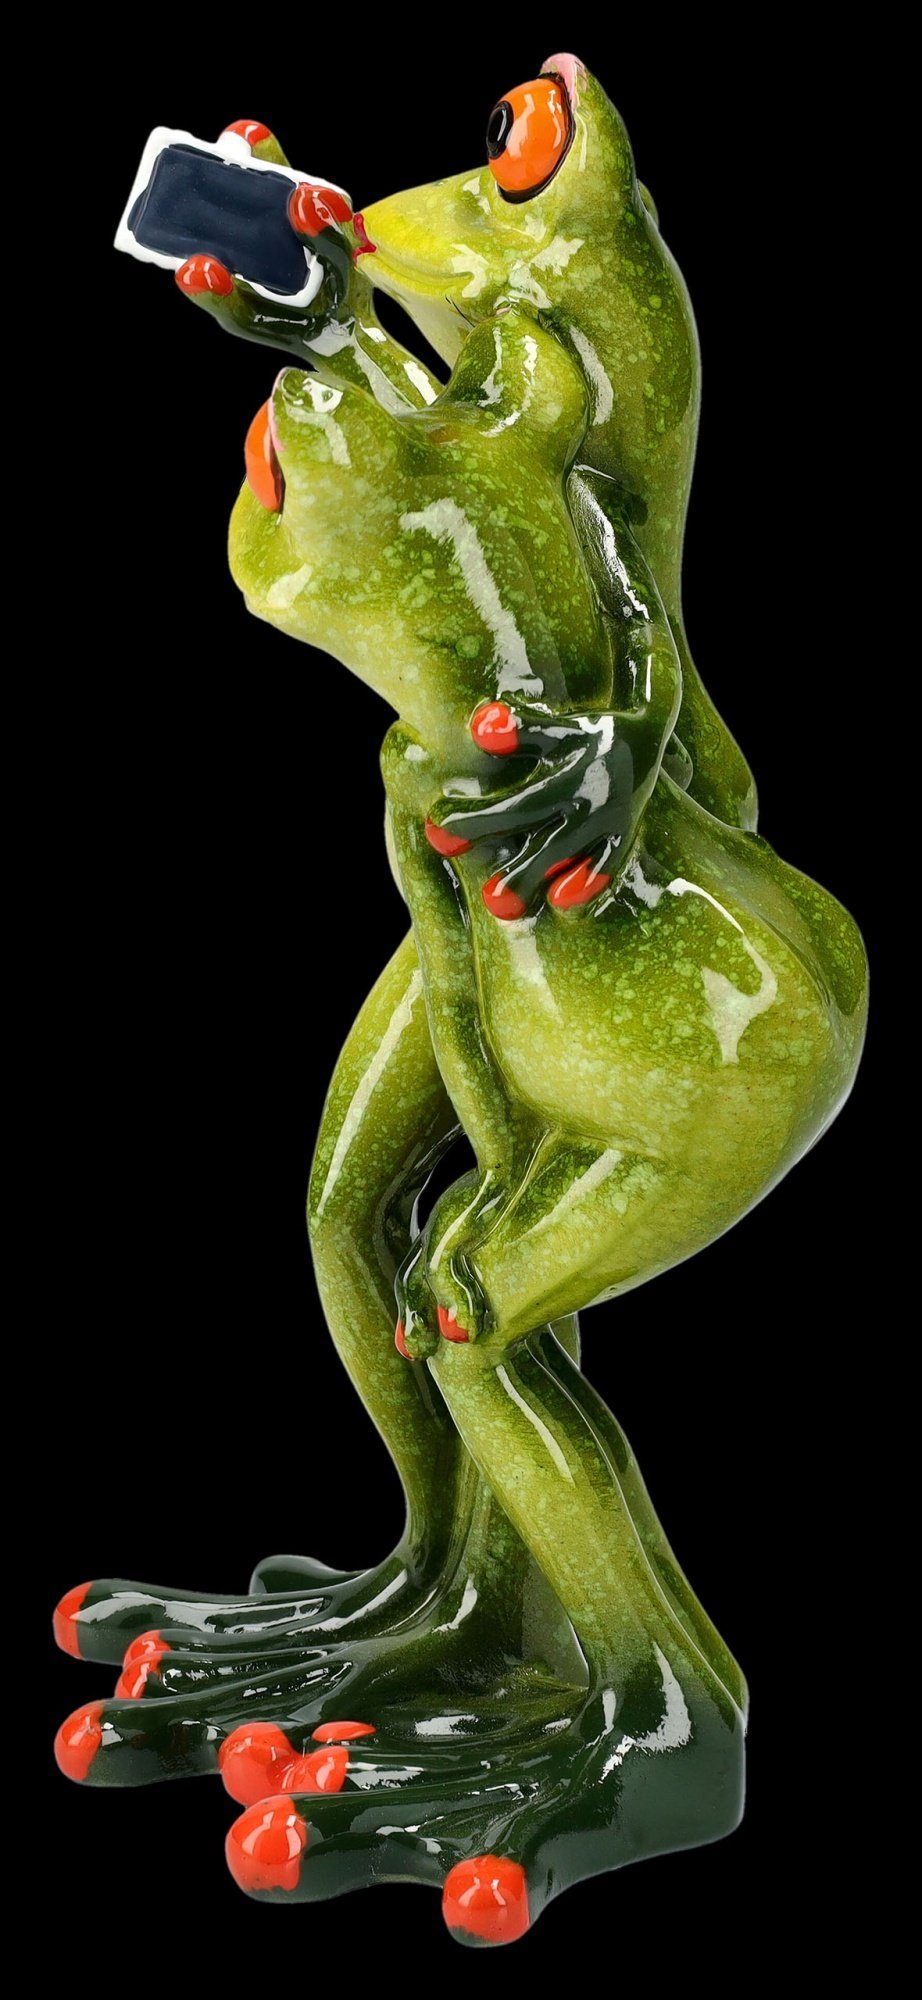 Dekoration spaßige Selfie GmbH Figur Figuren Dekofigur Lustige Tierfigur Shop Frosch - Liebespaar